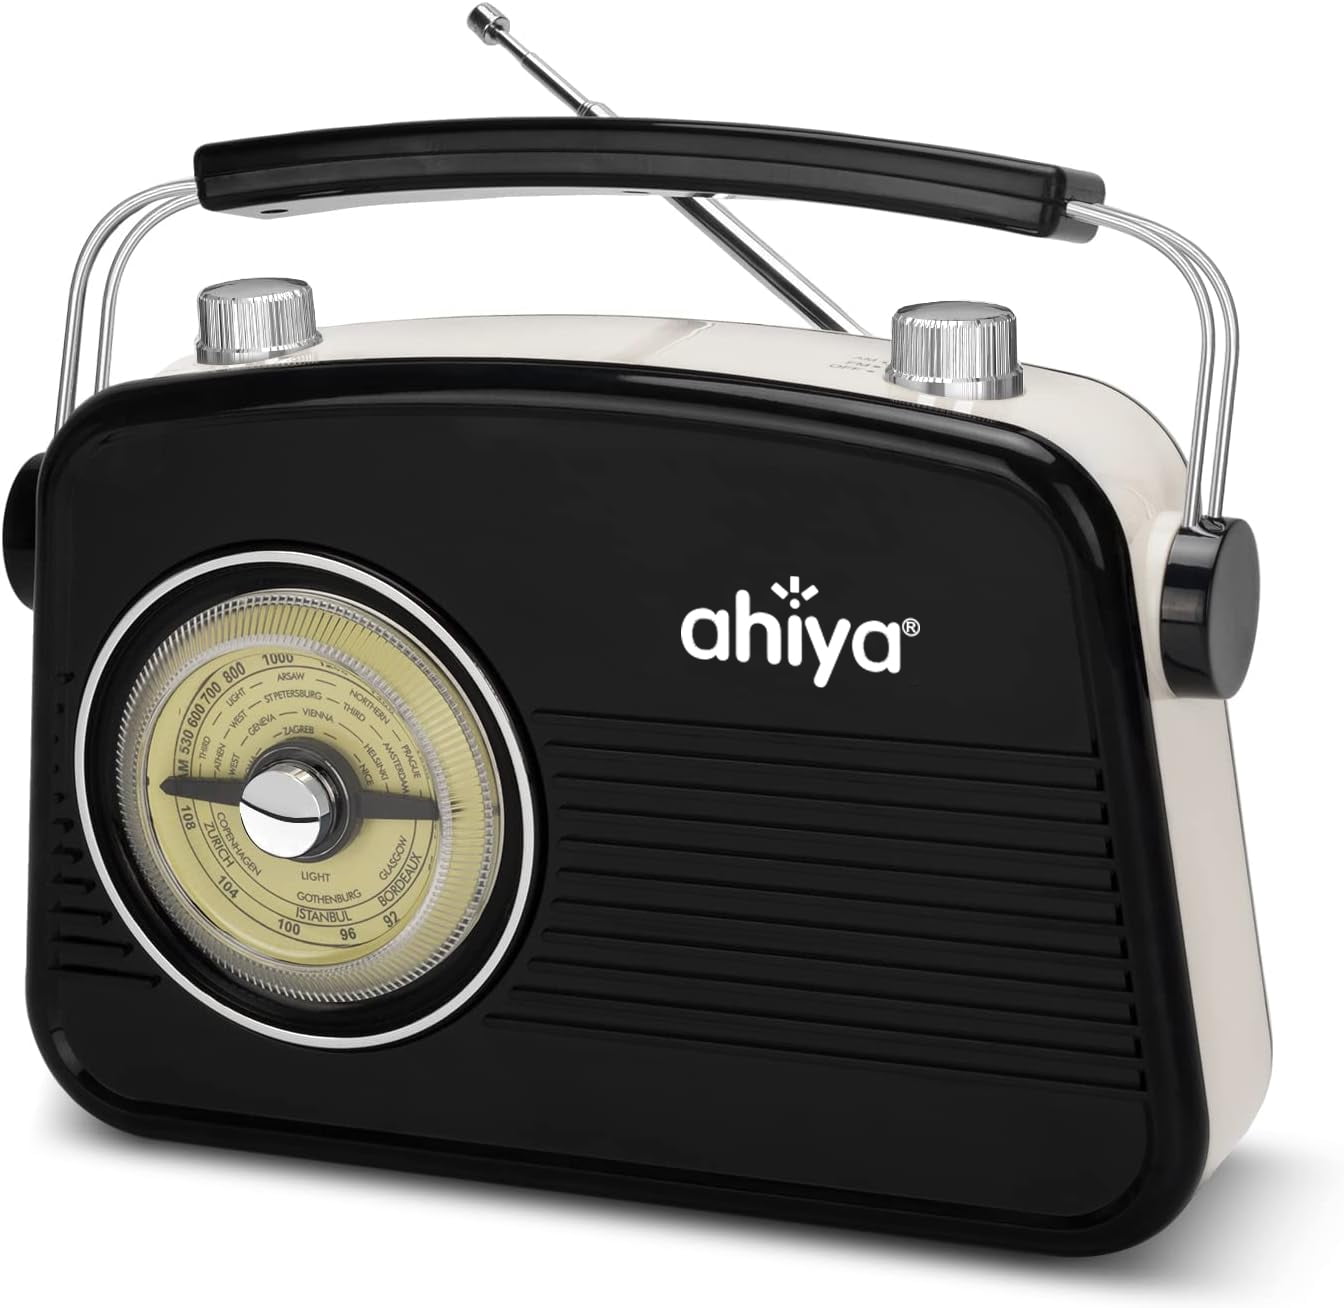 Akai A60015 Vintage Retro Radio AM/FM Alarm Clock - Black - Kettle